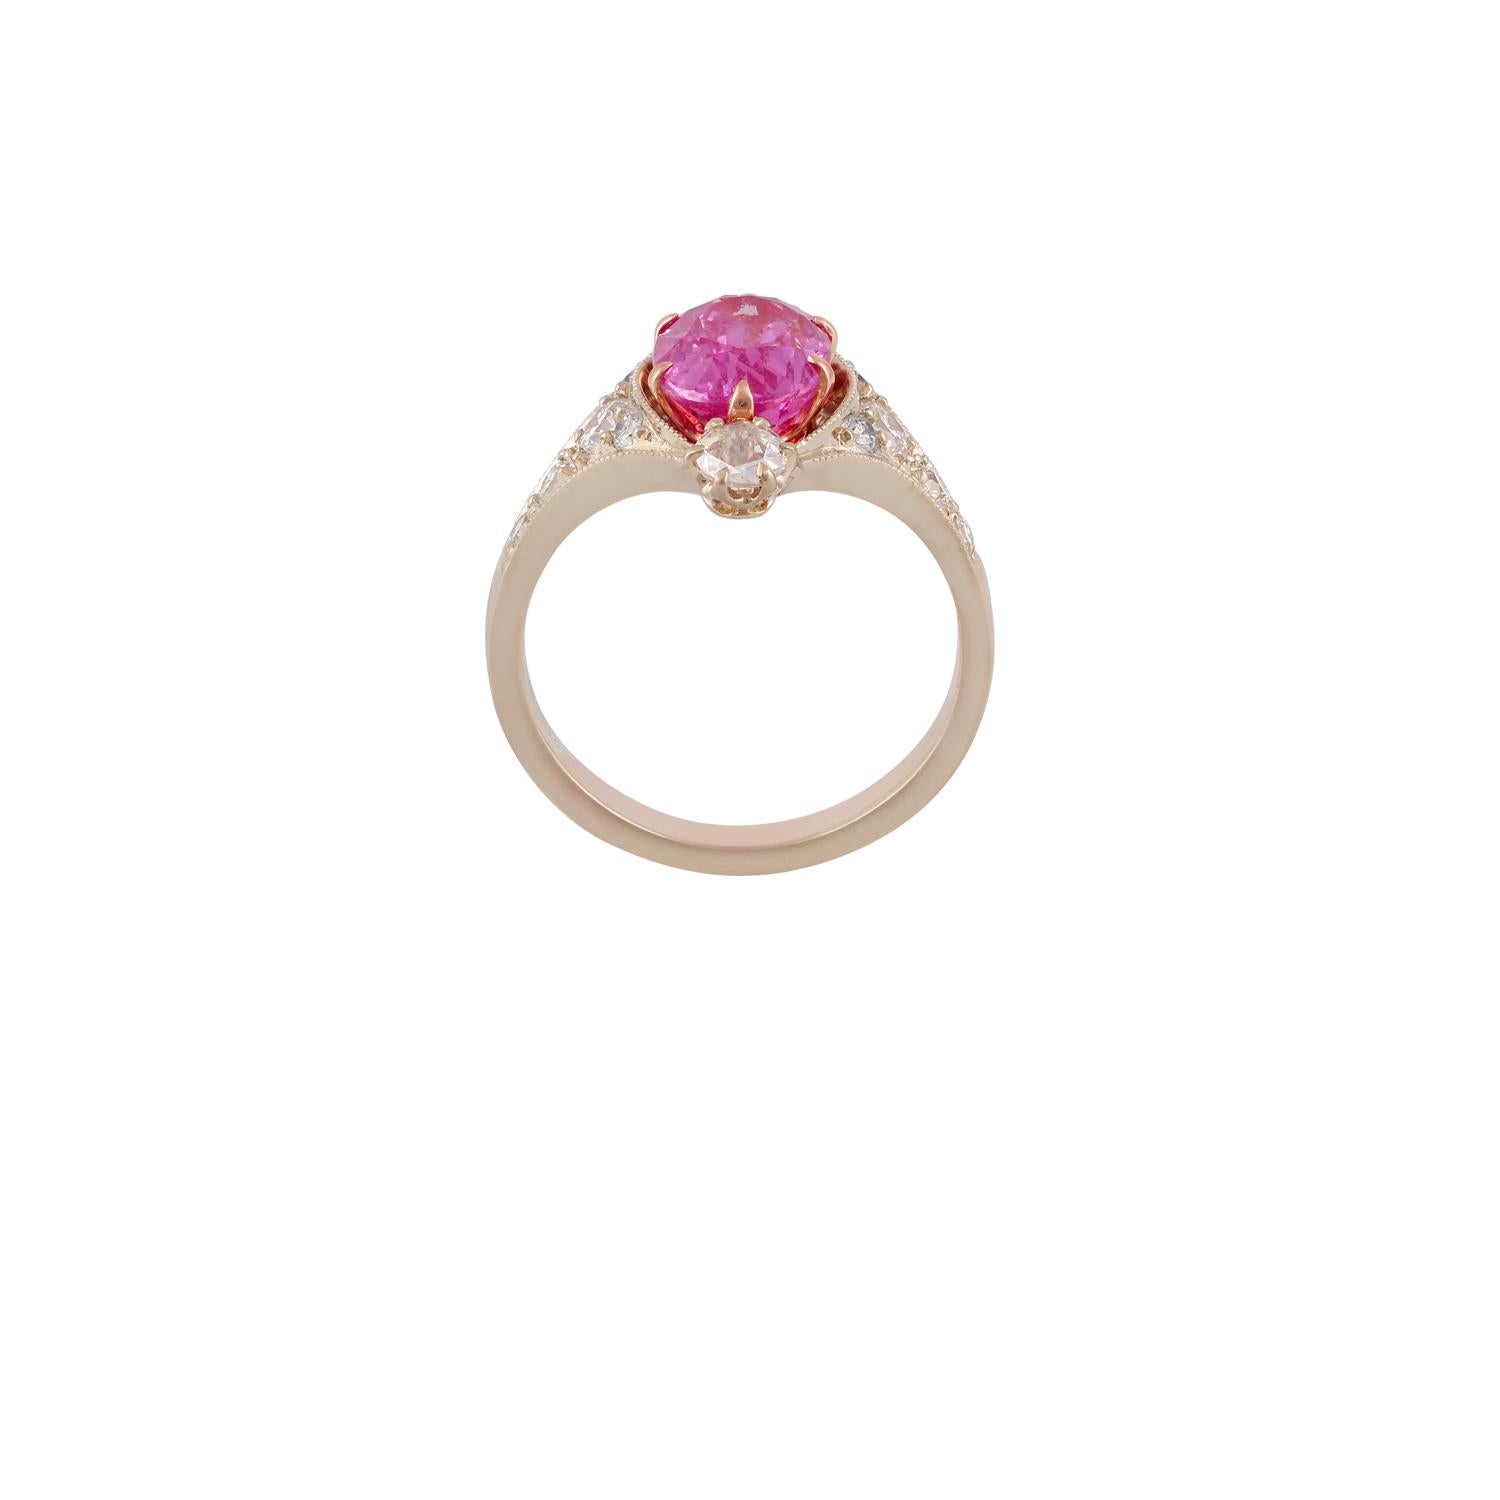 Oval Shaped Pink Sapphire - 2.74 Cts.
Diamond Rose Cuts - 0.25 Cts.
Round Shaped Diamonds - 0.46 Cts.
18 Karat White Gold - 4.92 Grams.